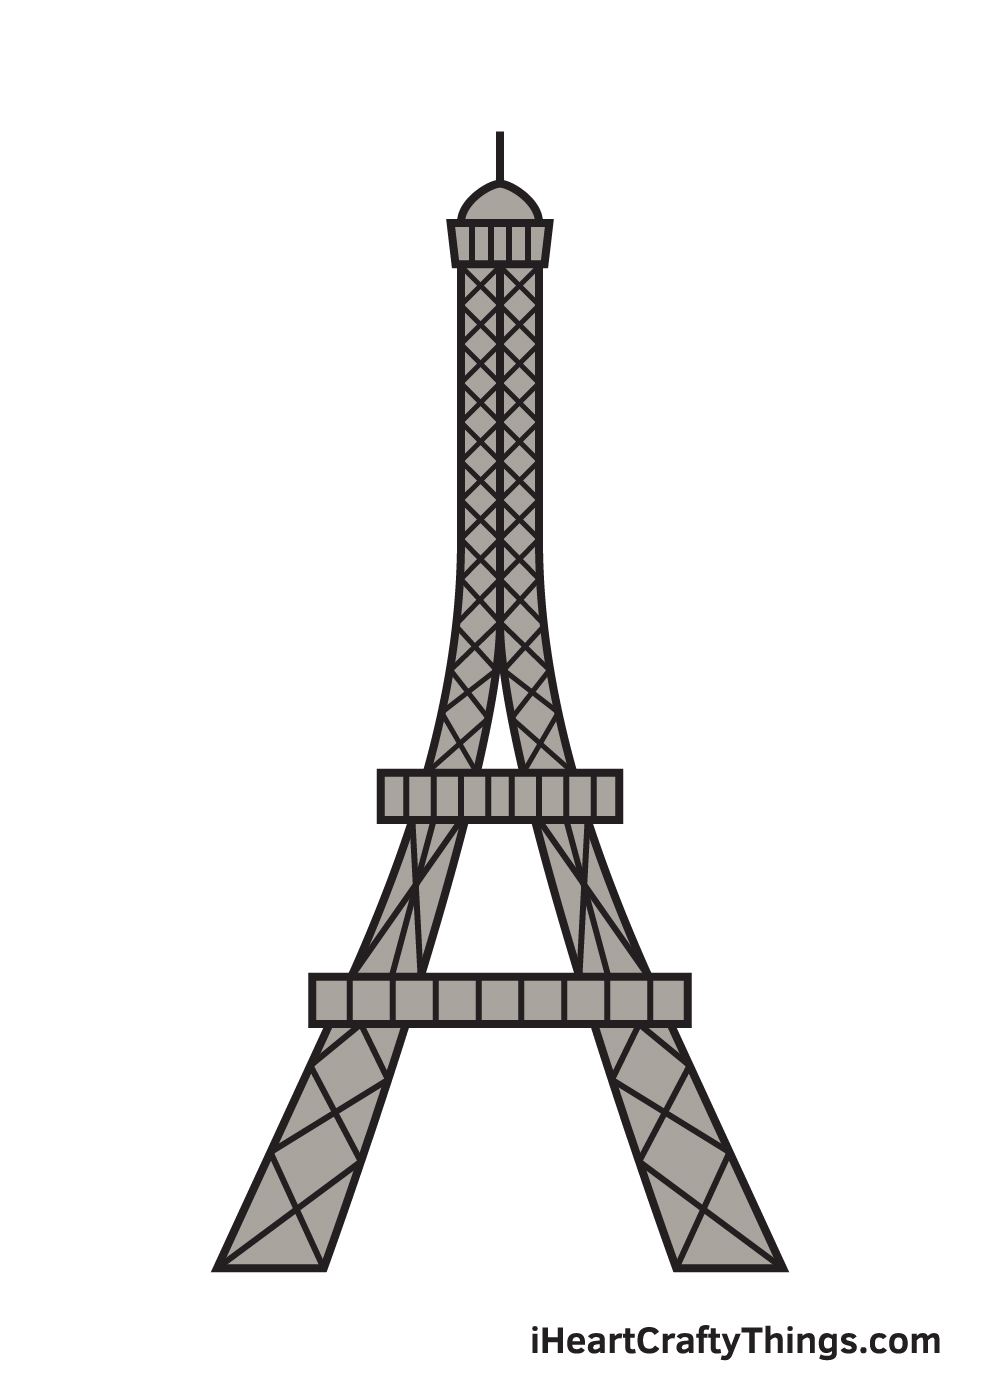 Eiffel Tower drawing - 9 steps